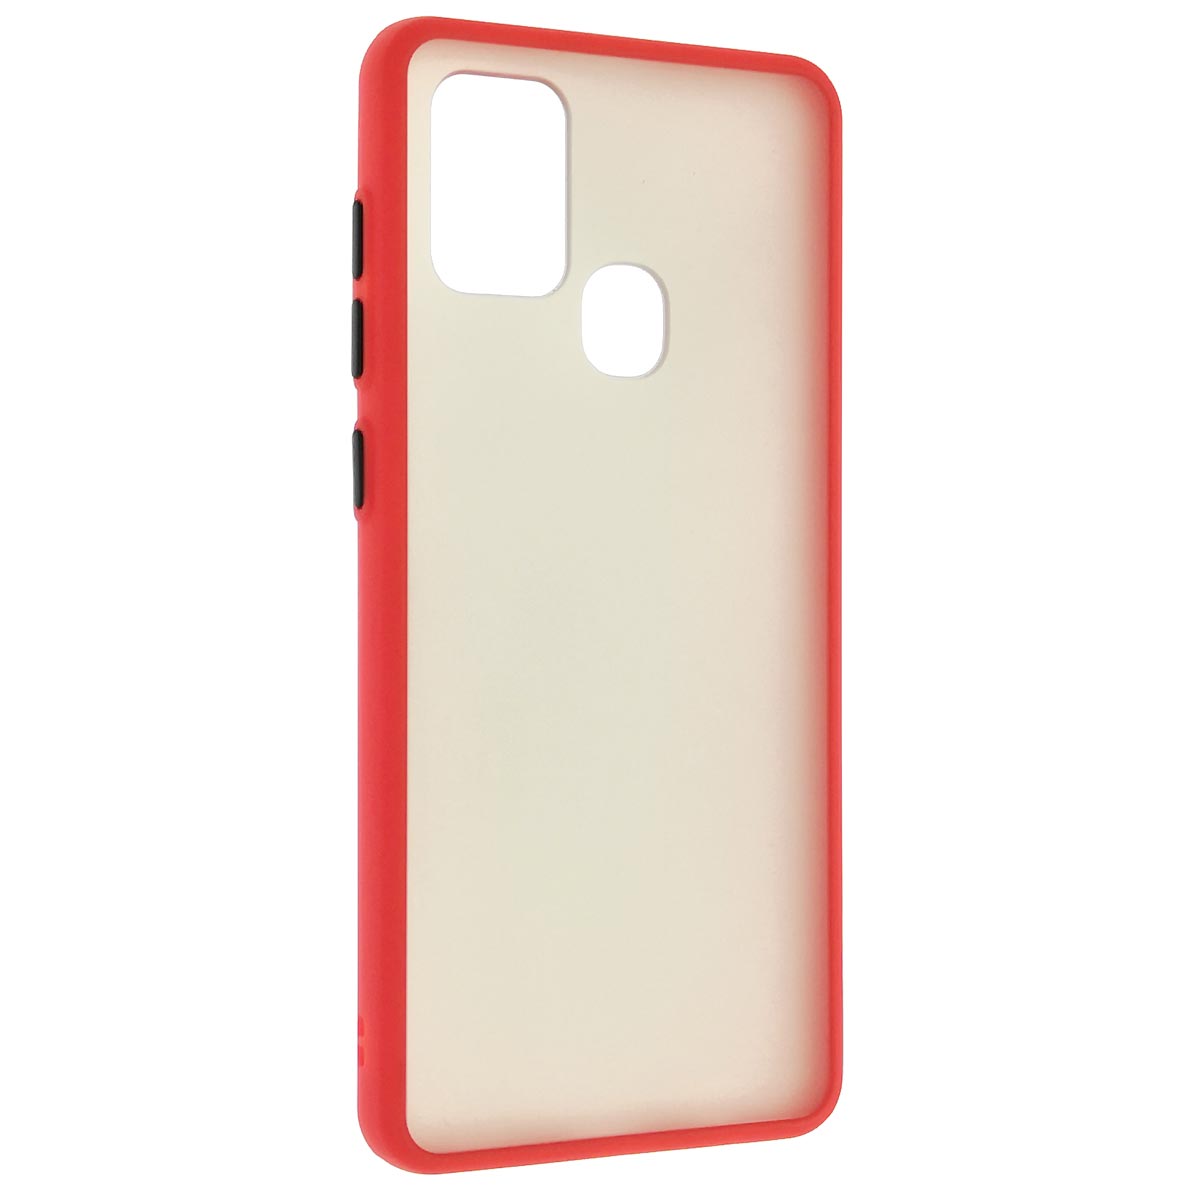 Чехол накладка SKIN SHELL для SAMSUNG Galaxy A21S (SM-A217F), силикон, пластик, цвет окантовки красный